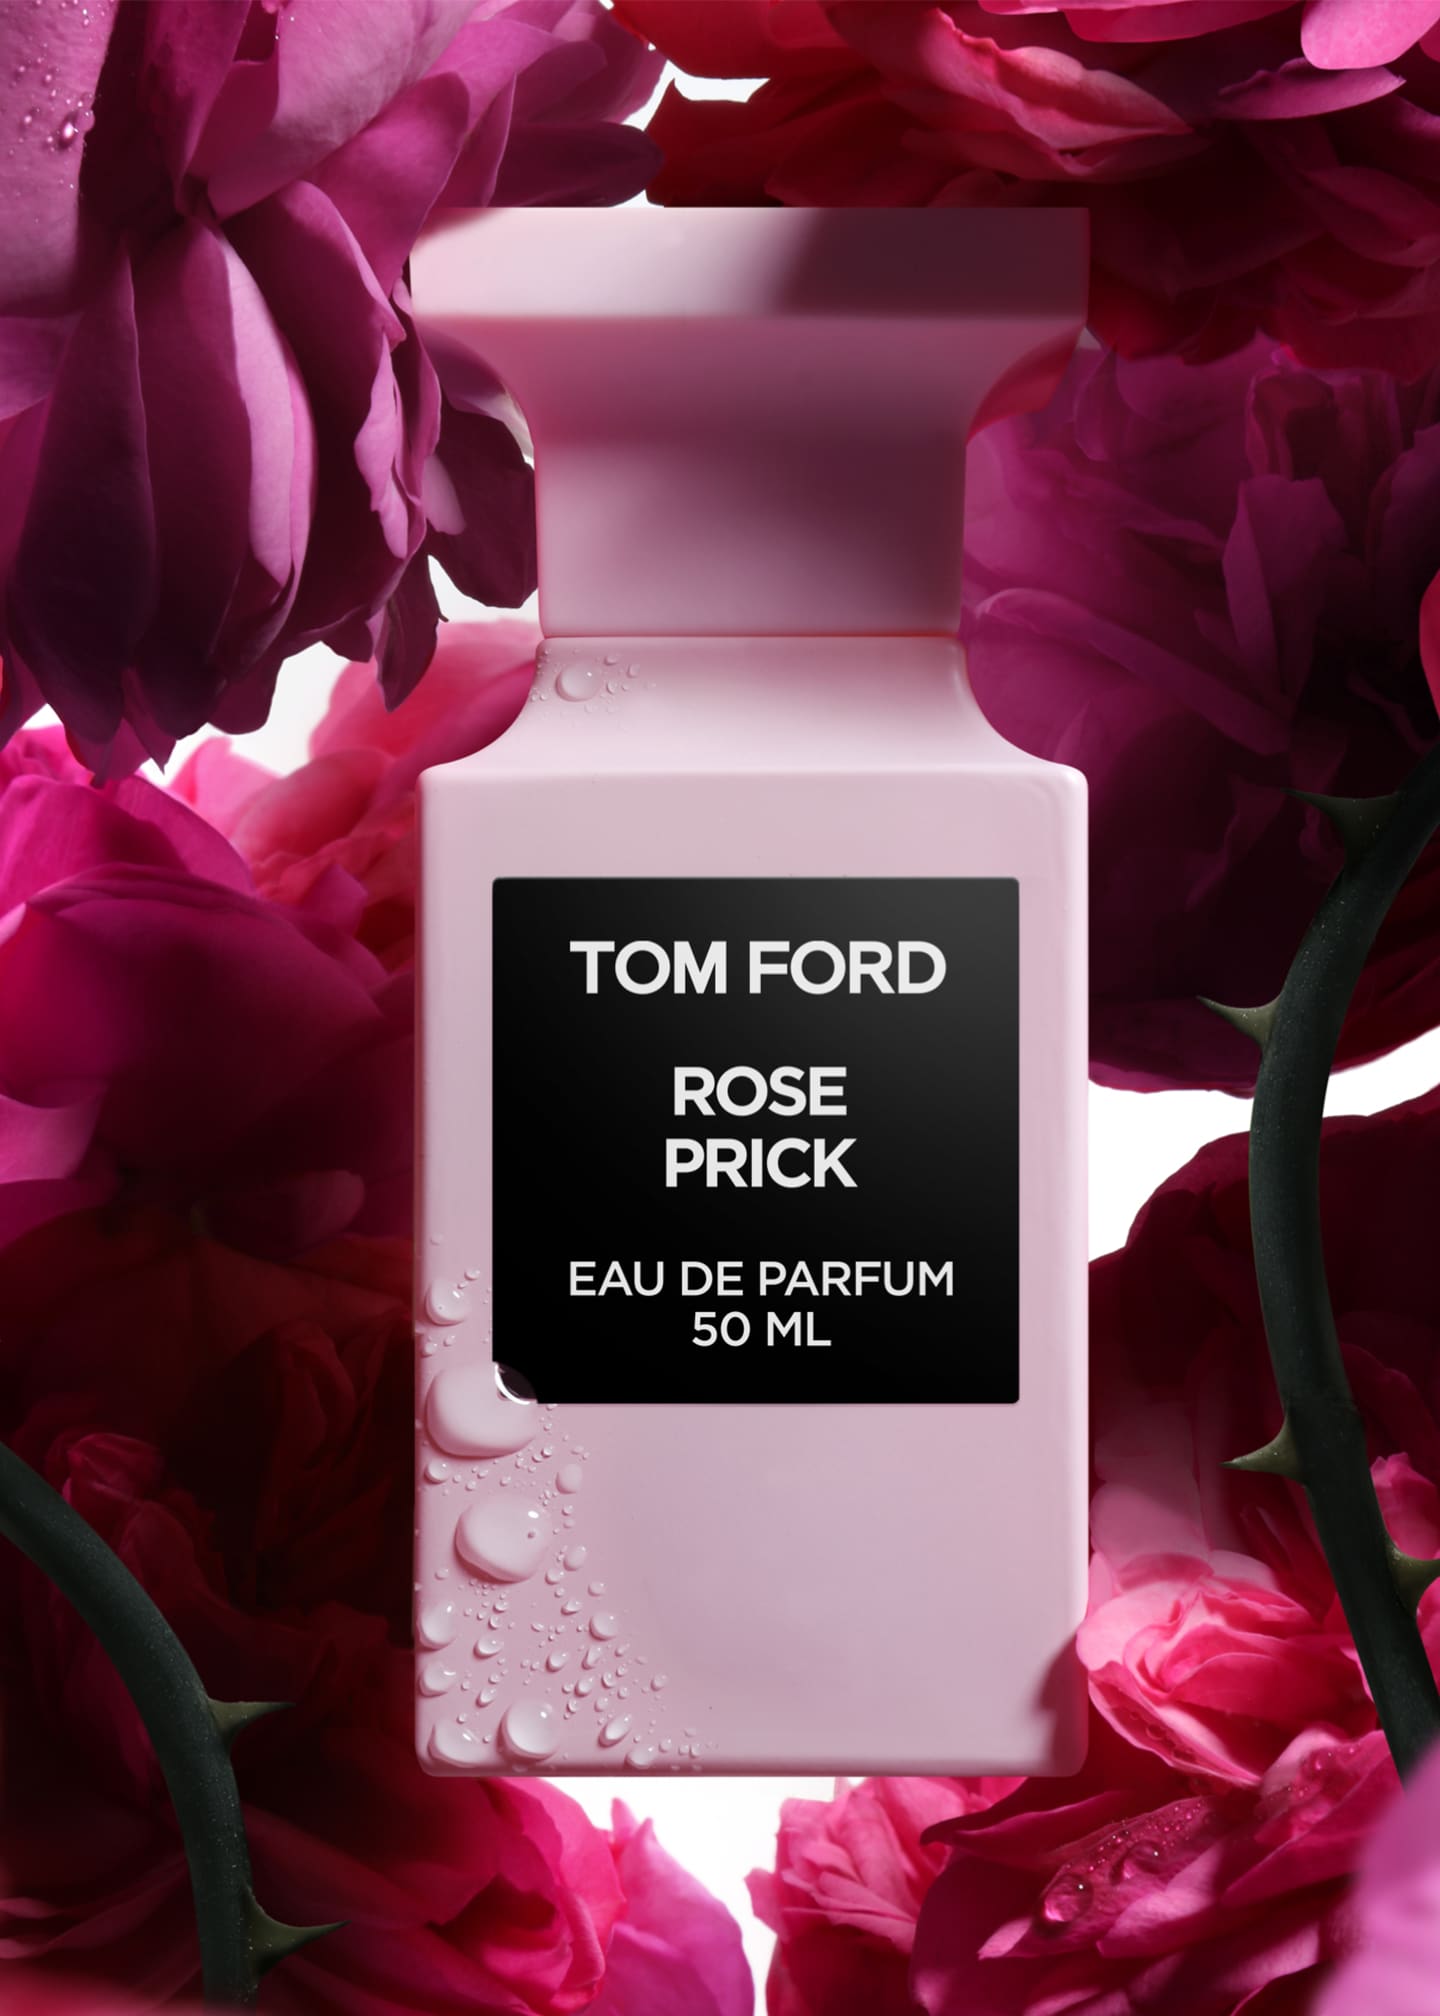 TOM FORD Rose Prick Eau de Parfum Fragrance 250ml Decanter Image 4 of 4